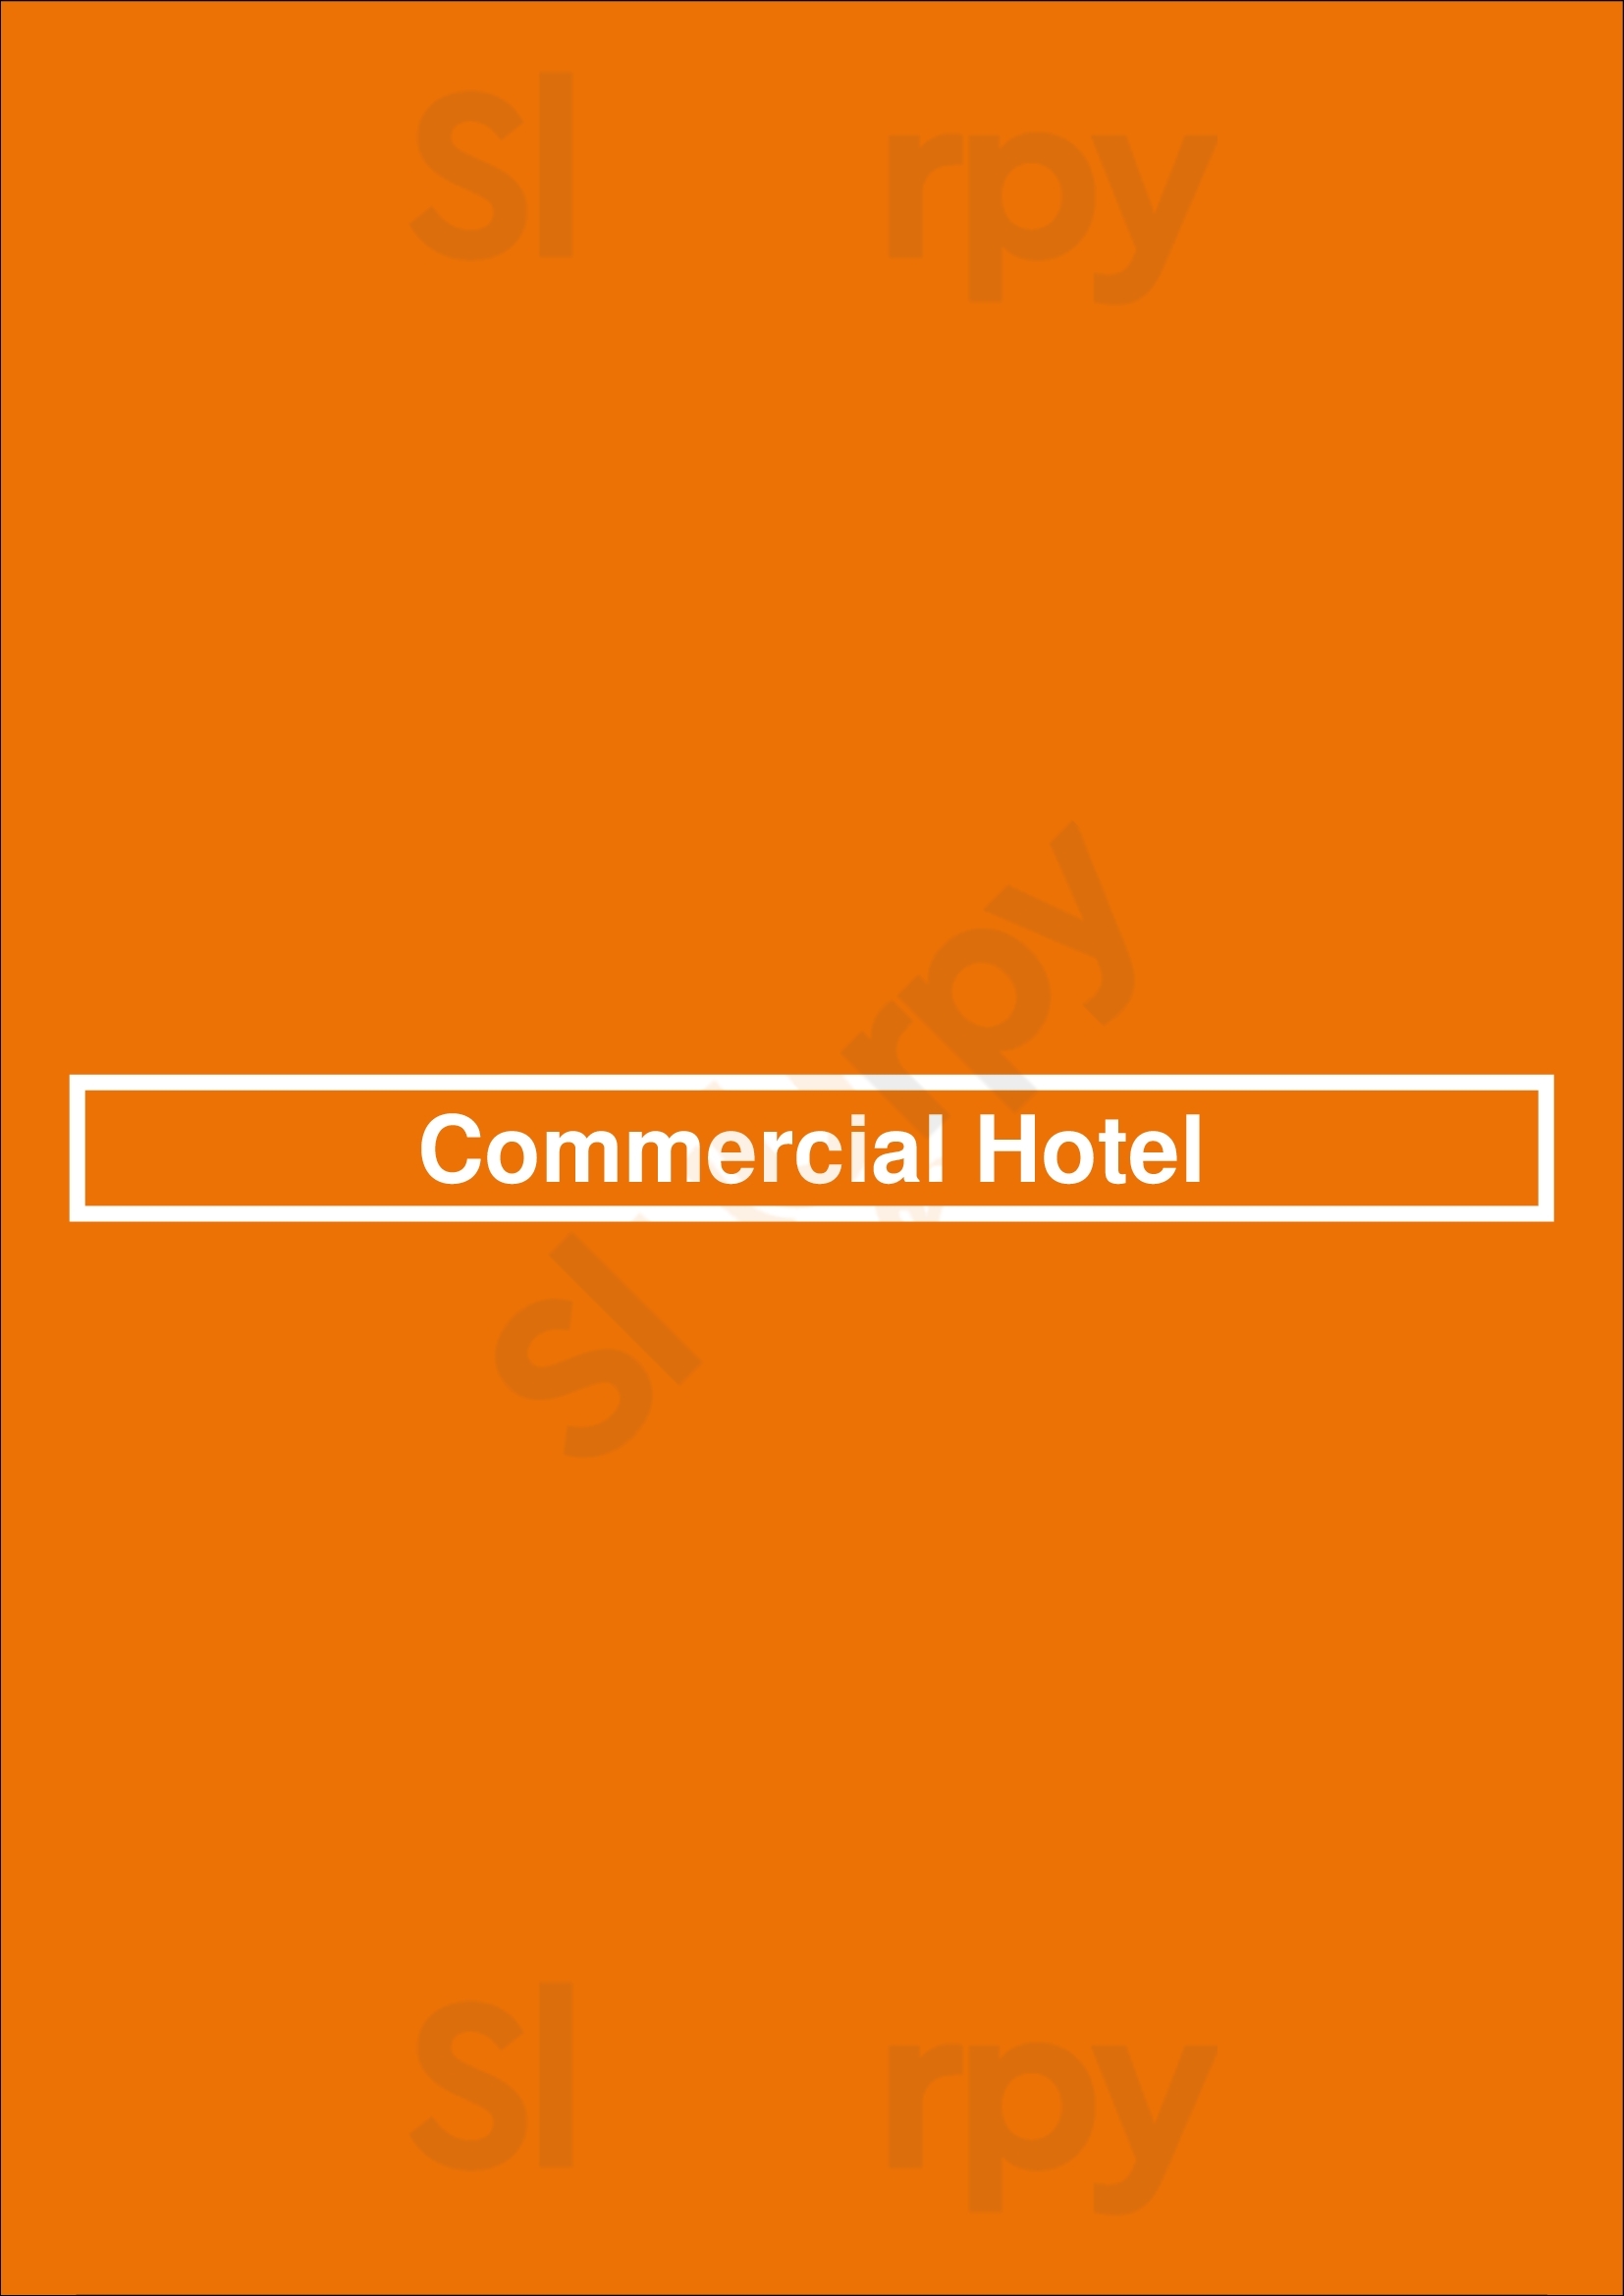 Commercial Hotel Werribee Menu - 1